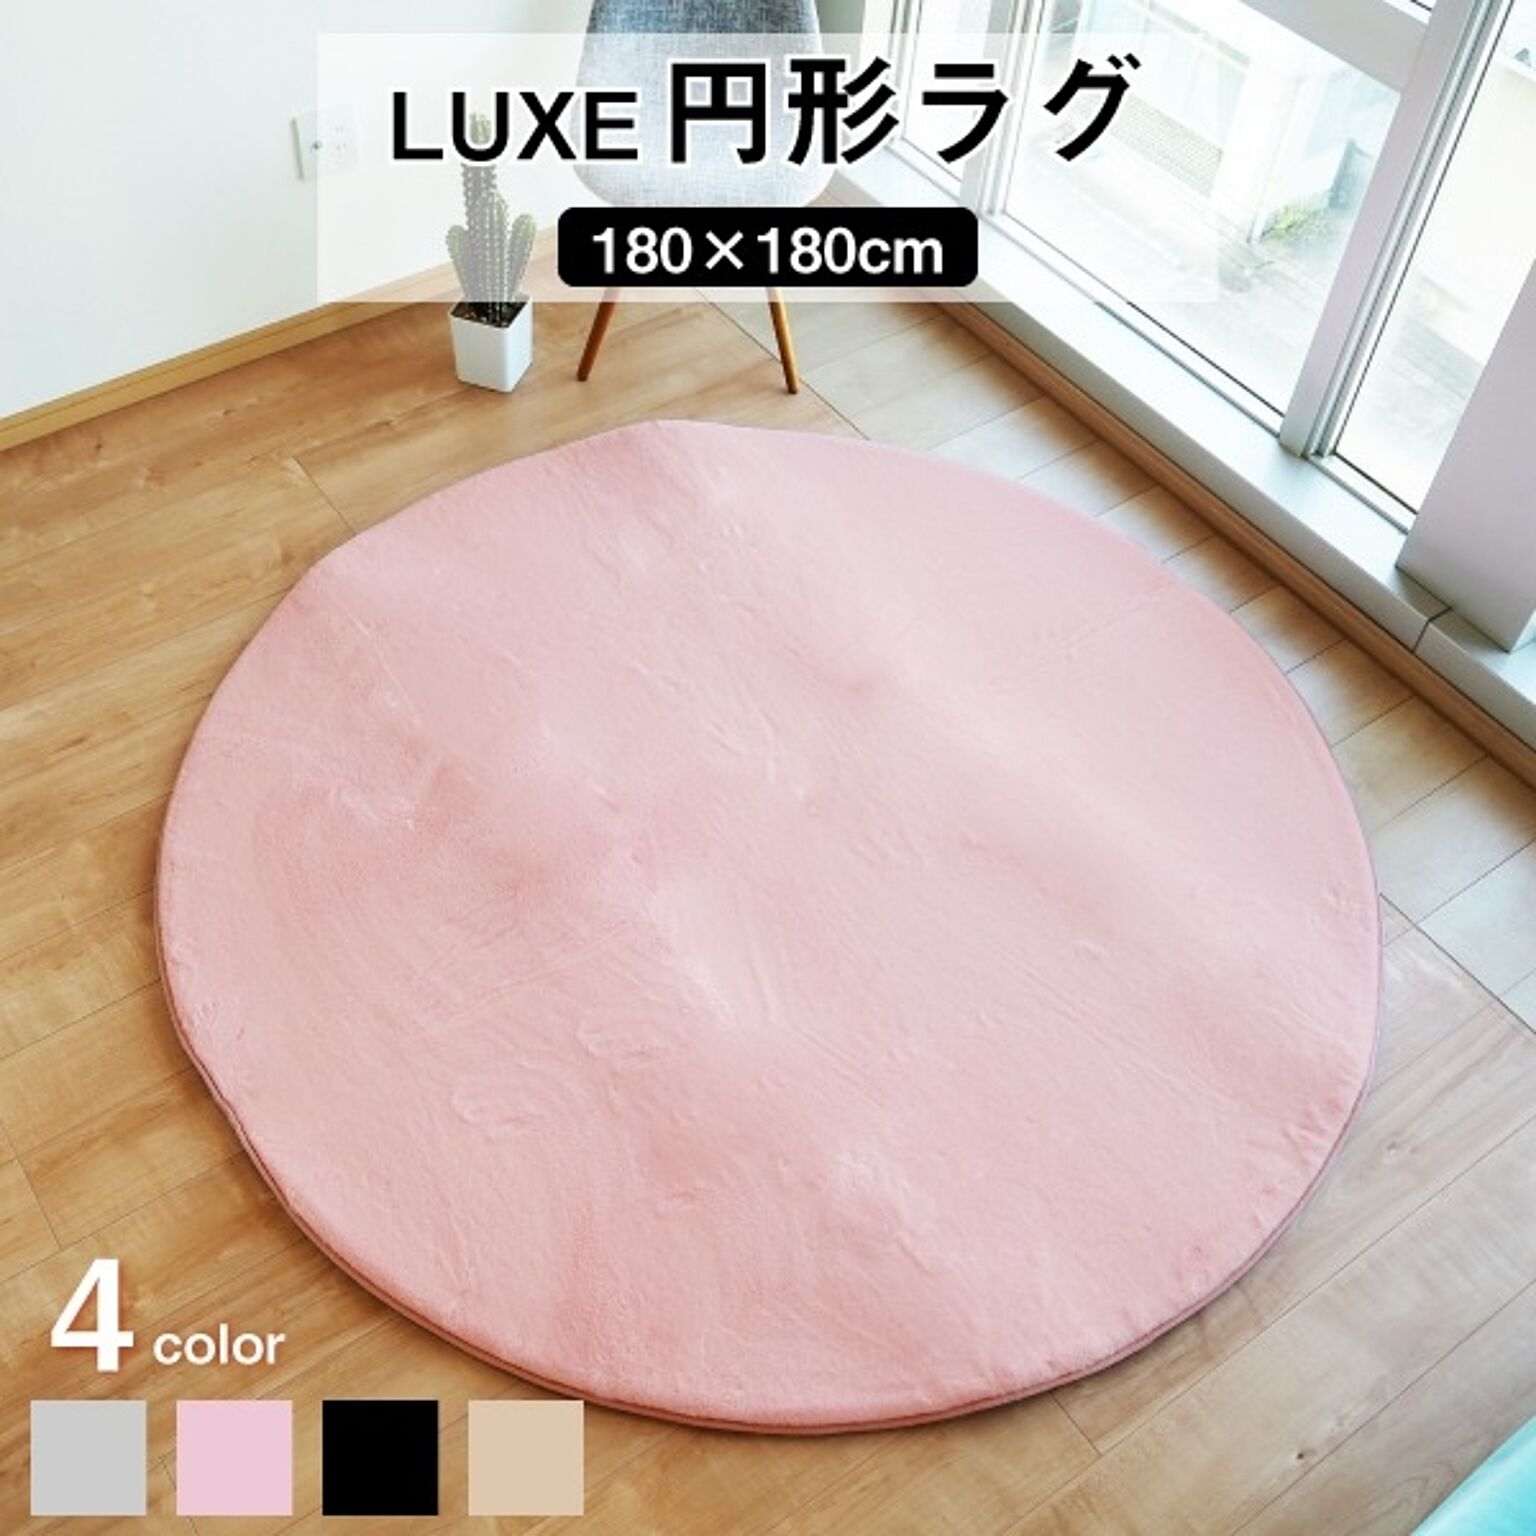 LUXE 円形ラグマット 約180cm ピンク 高密度 滑り止め加工